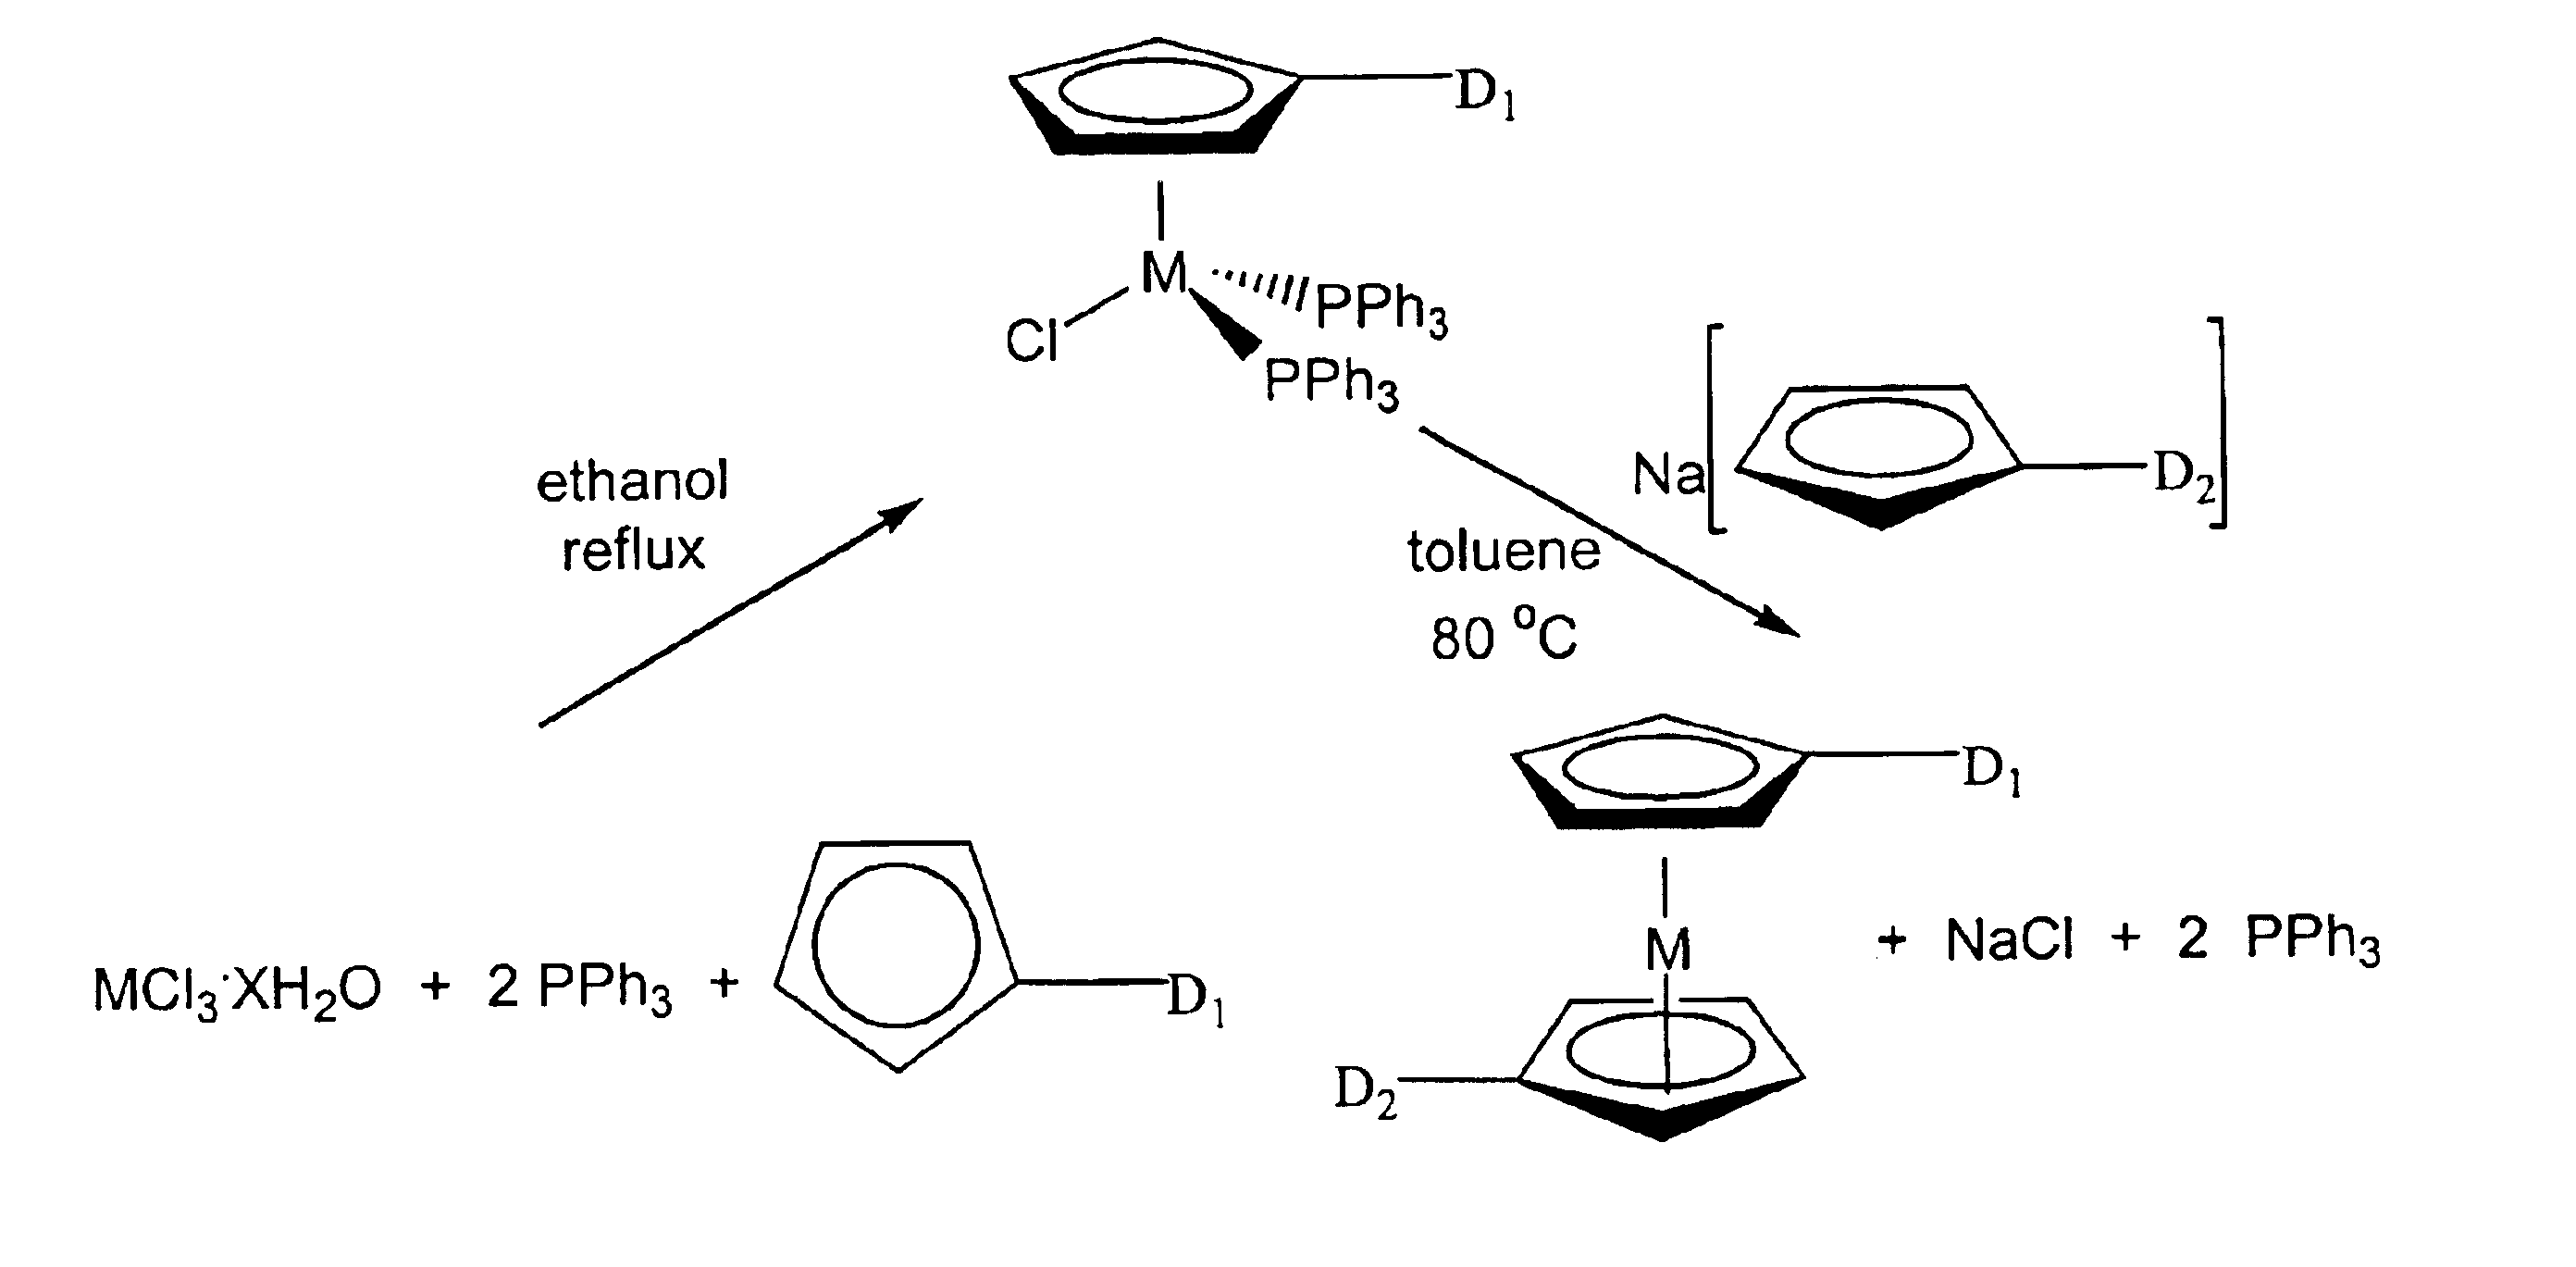 Methods for making metallocene compounds